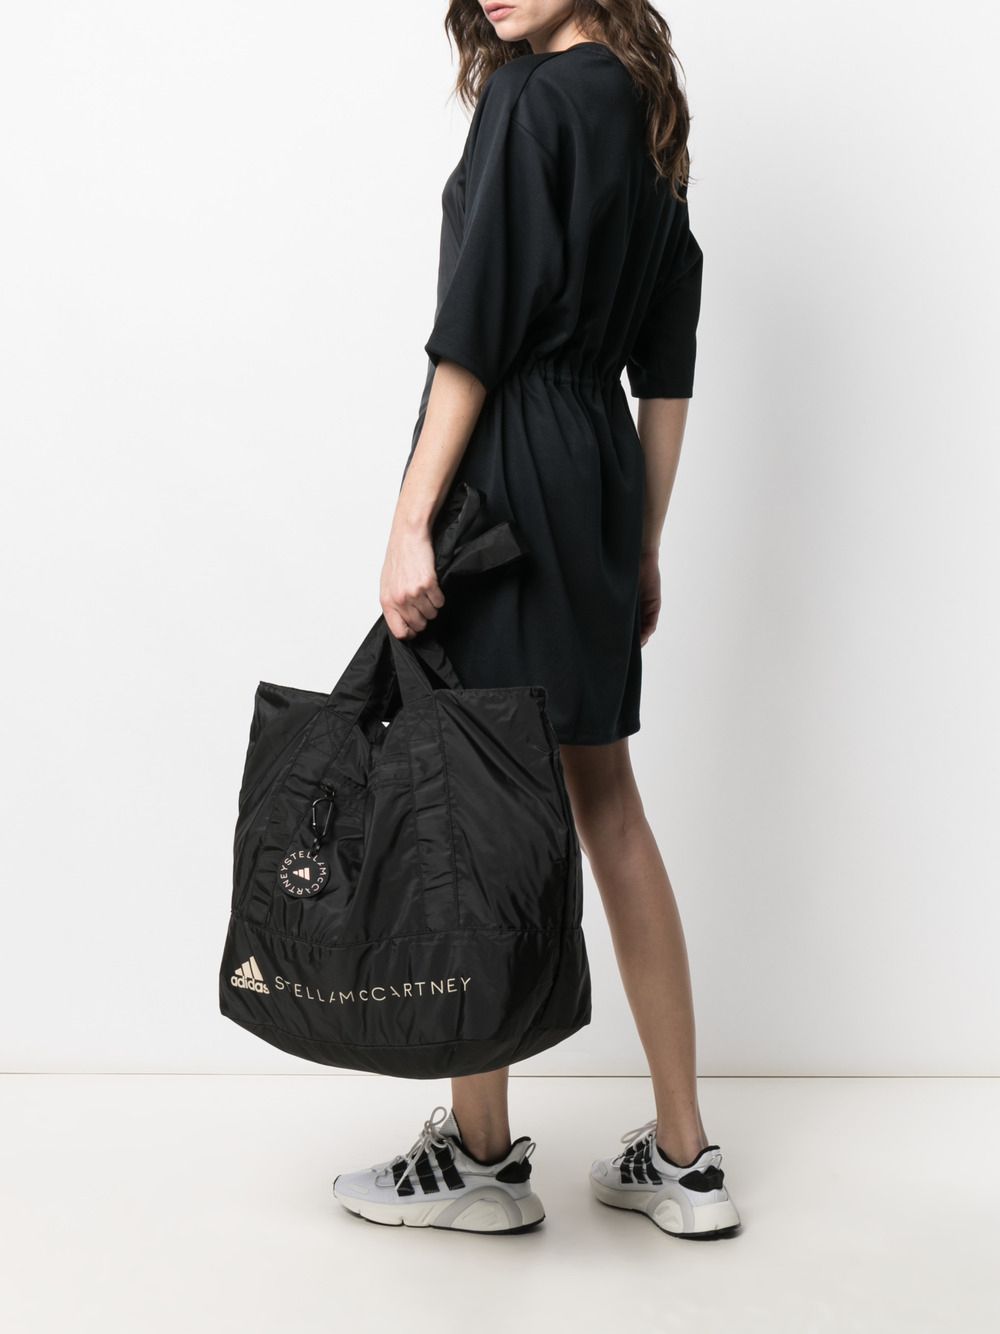 фото Adidas сумка-тоут из коллаборации со stella mccartney